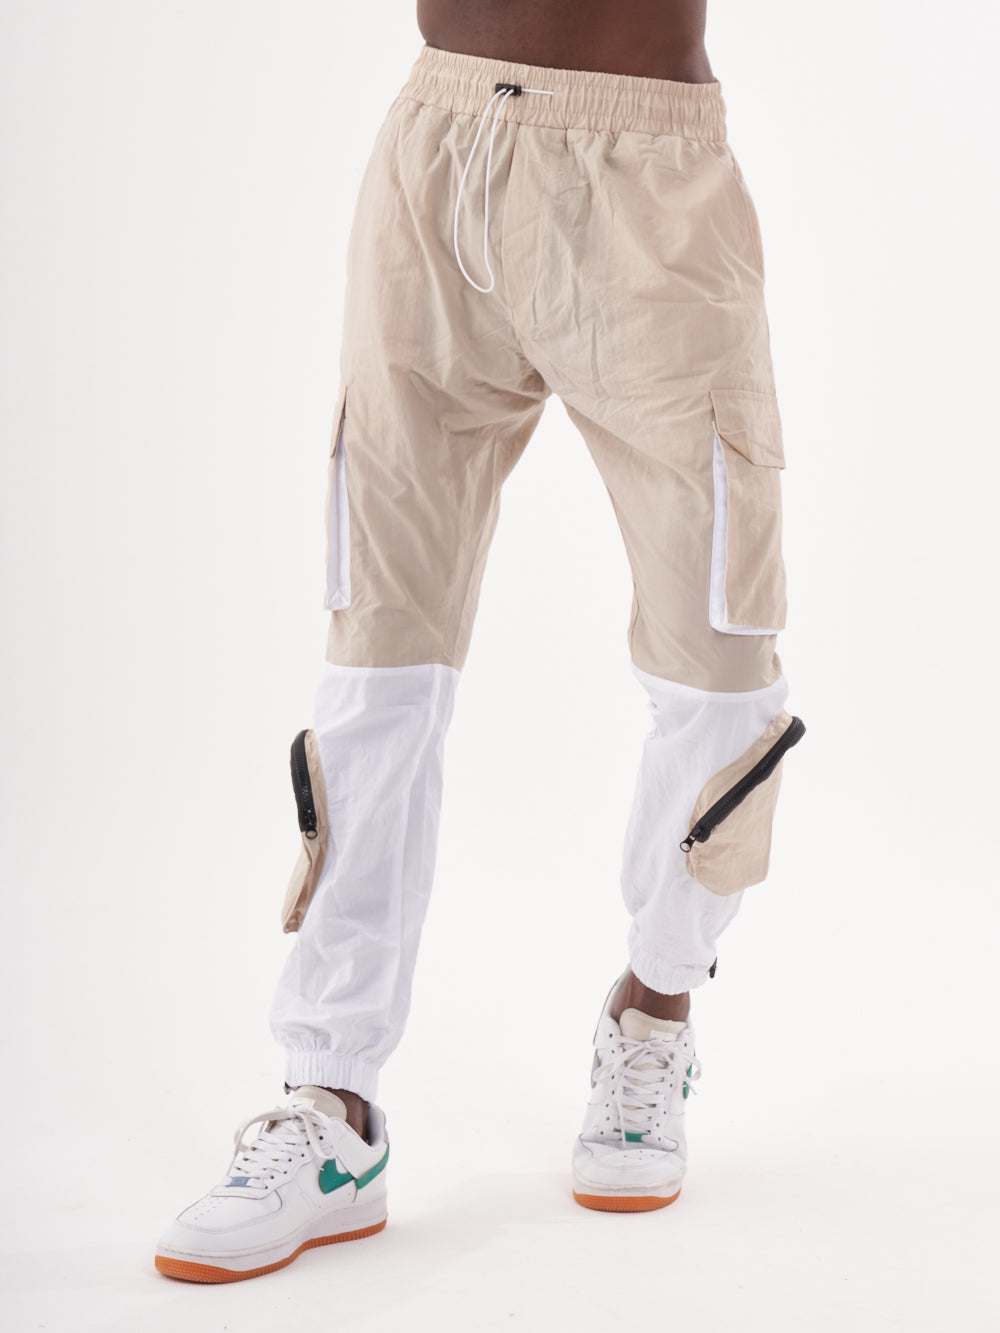 A man wearing RENEGADE | BEIGE cargo pants.